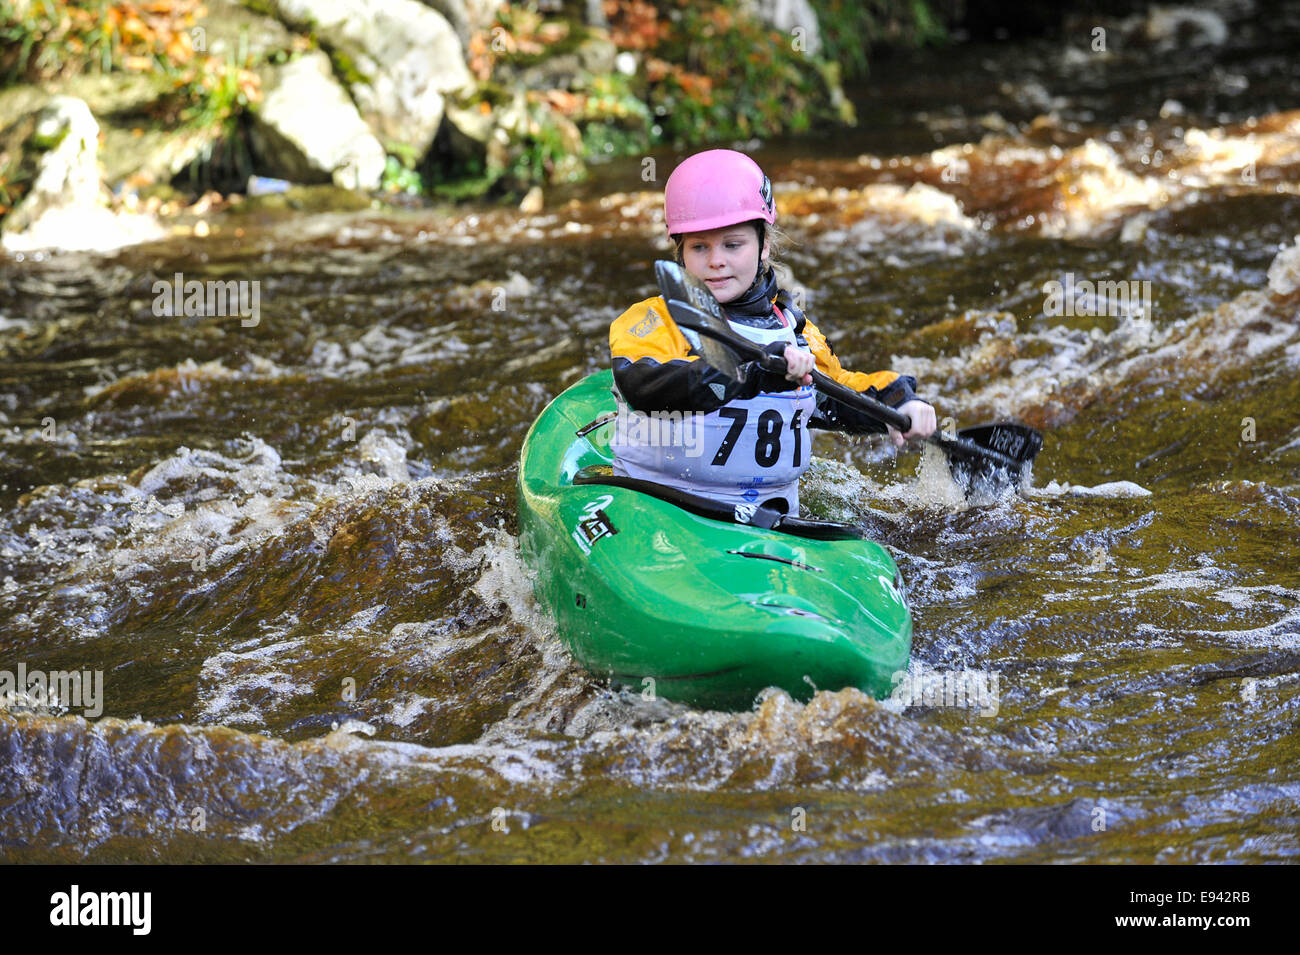 Stock Photo - Kayaking competition, Buncrana, County Donegal, Ireland.  ©George Sweeney /Alamy Stock Photo